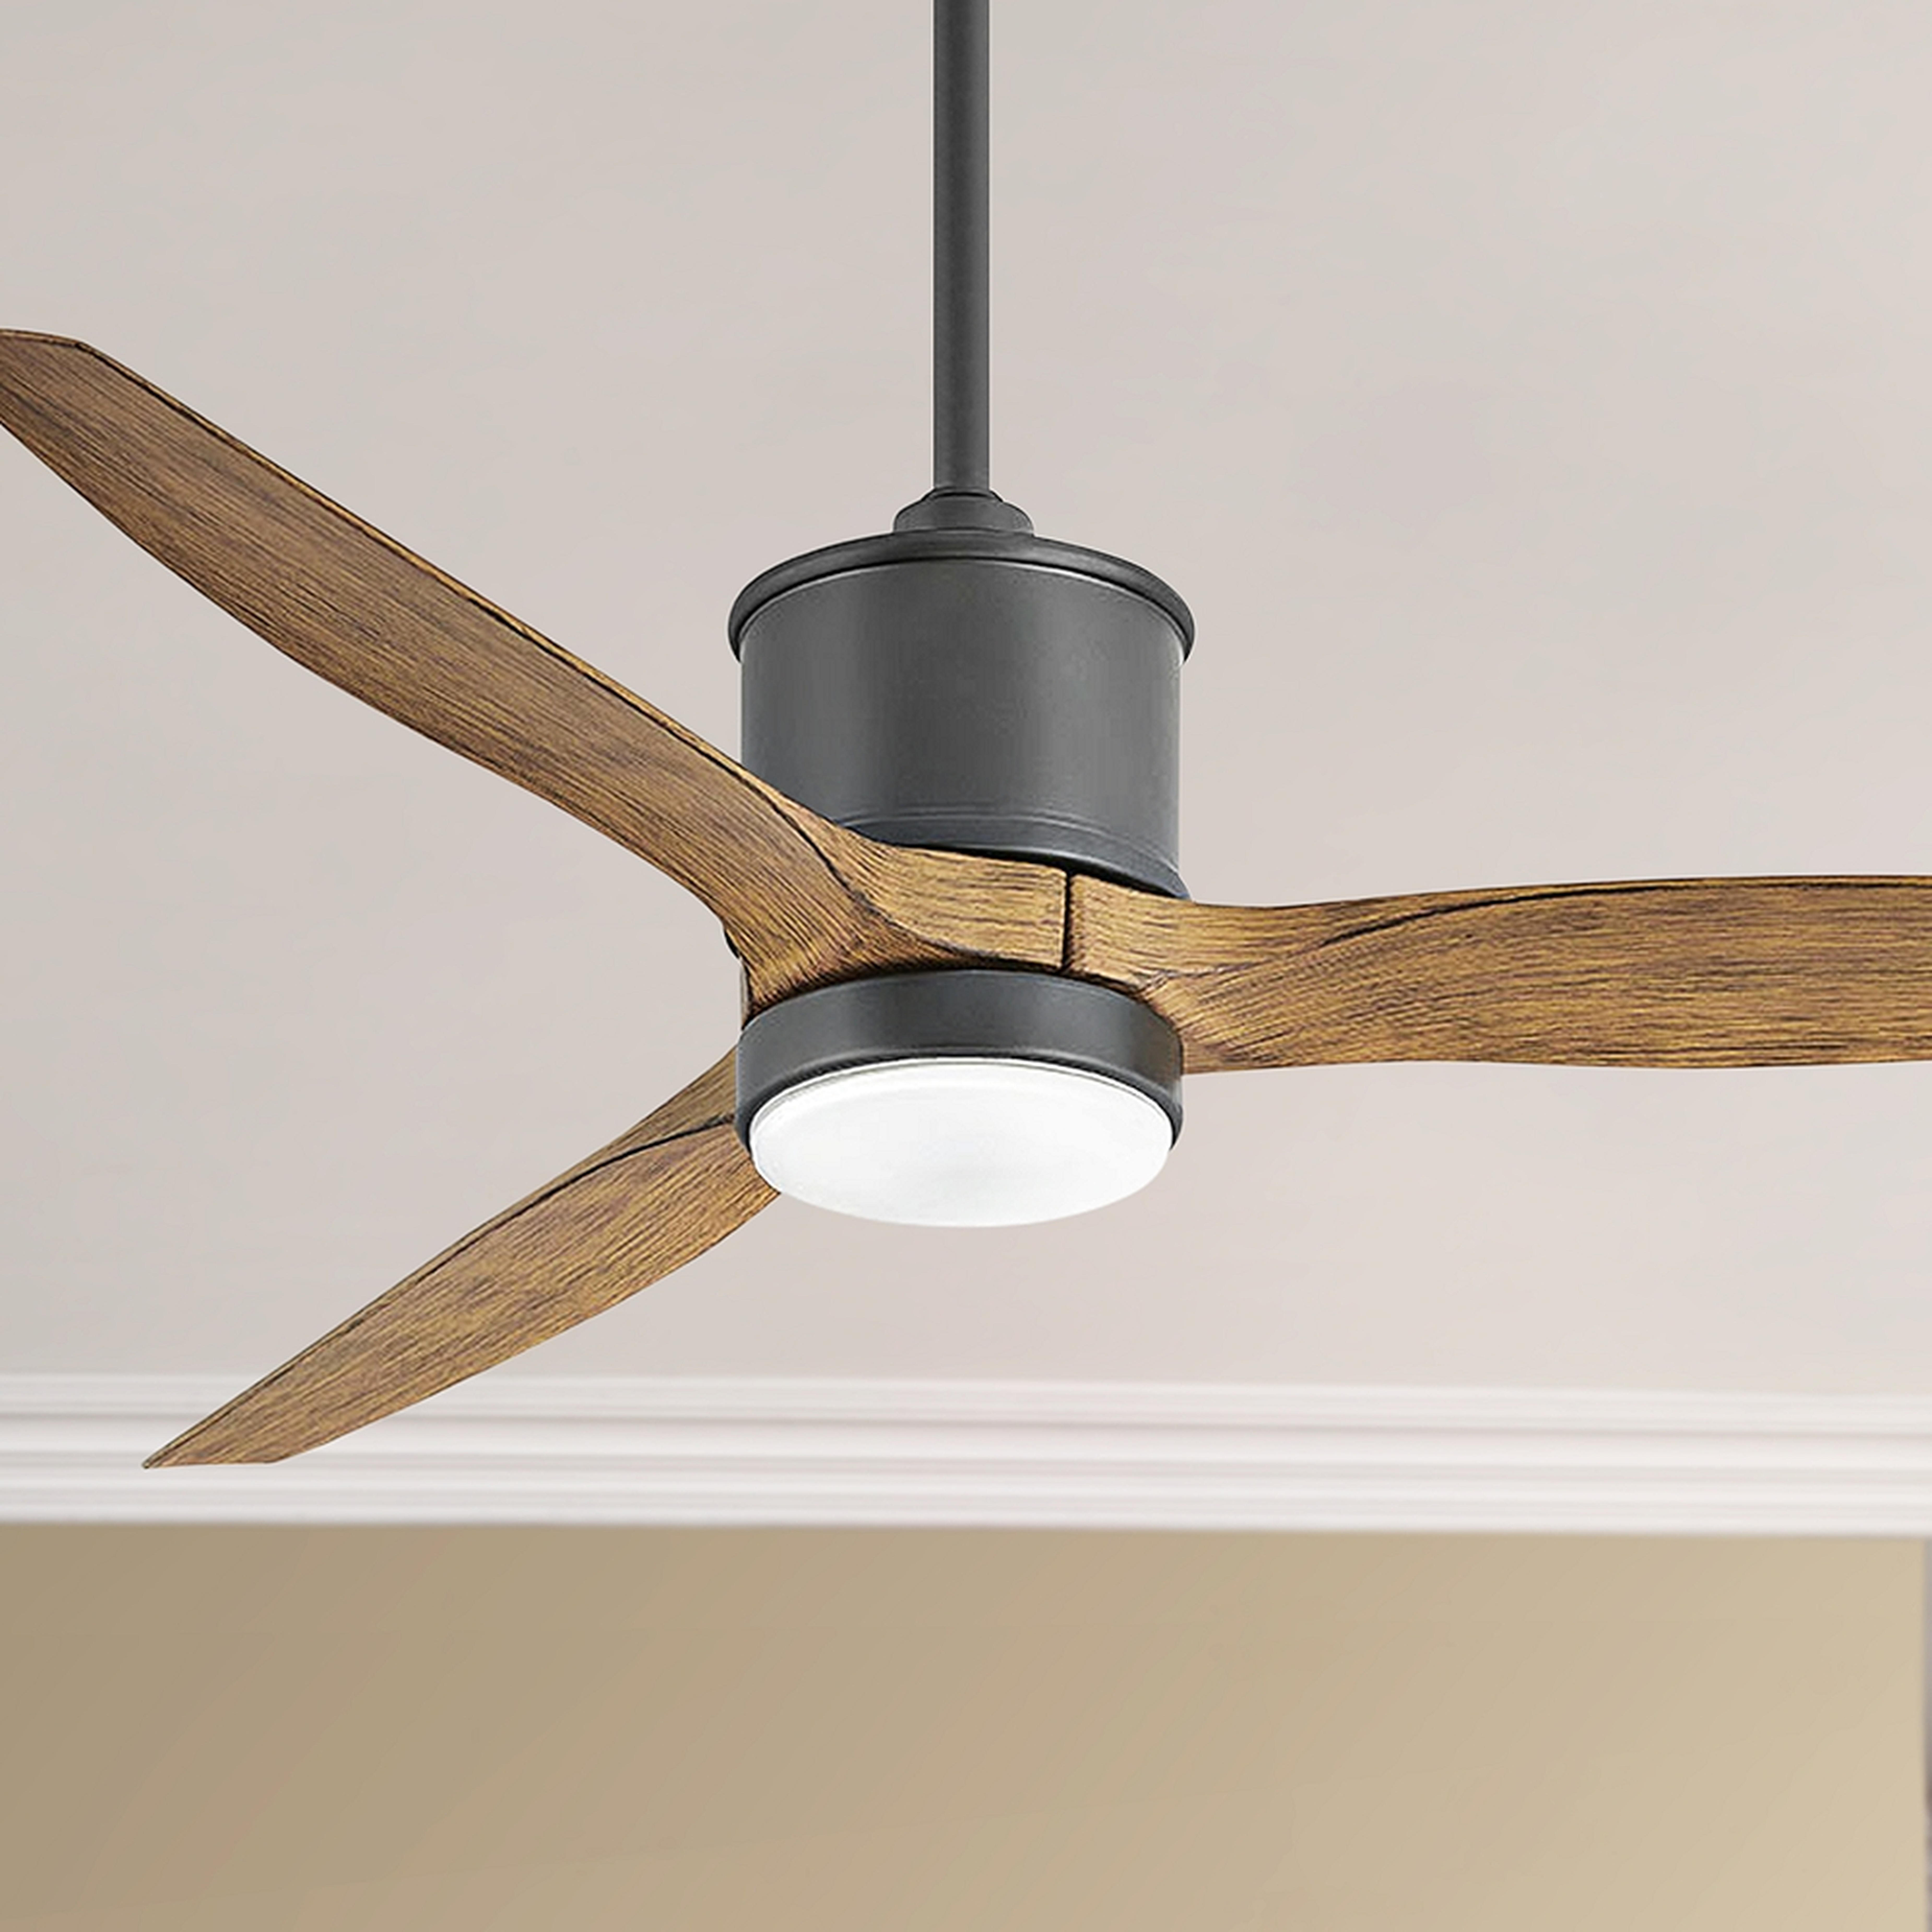 52" Hinkley Hover Matte Black Wet LED Ceiling Fan - Style # 84J76 - Lamps Plus